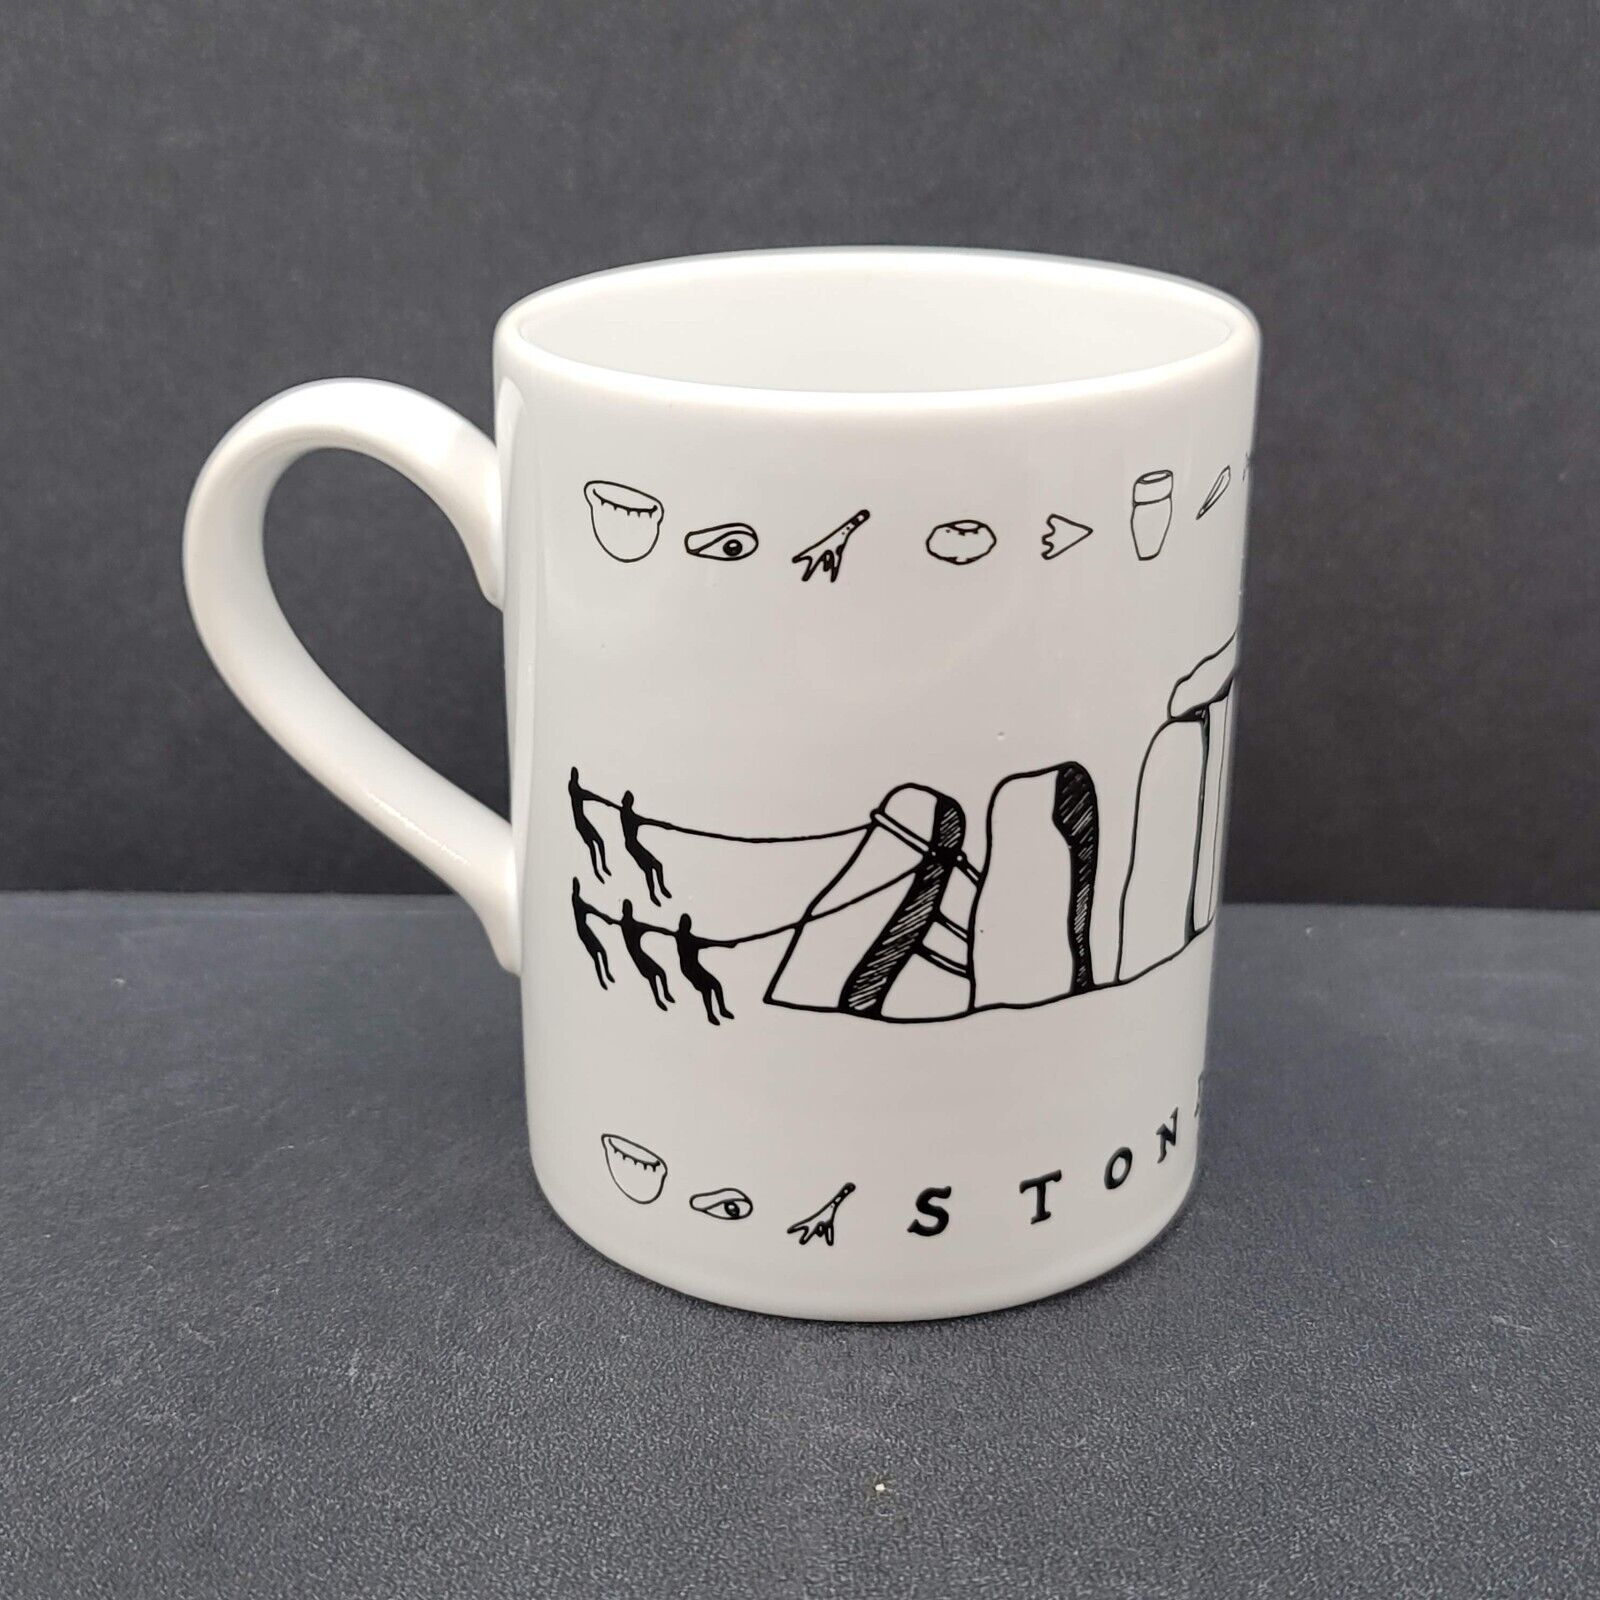 Stonehenge Coffee Mug Coloroll Made in England English Heritage Gift Vintage